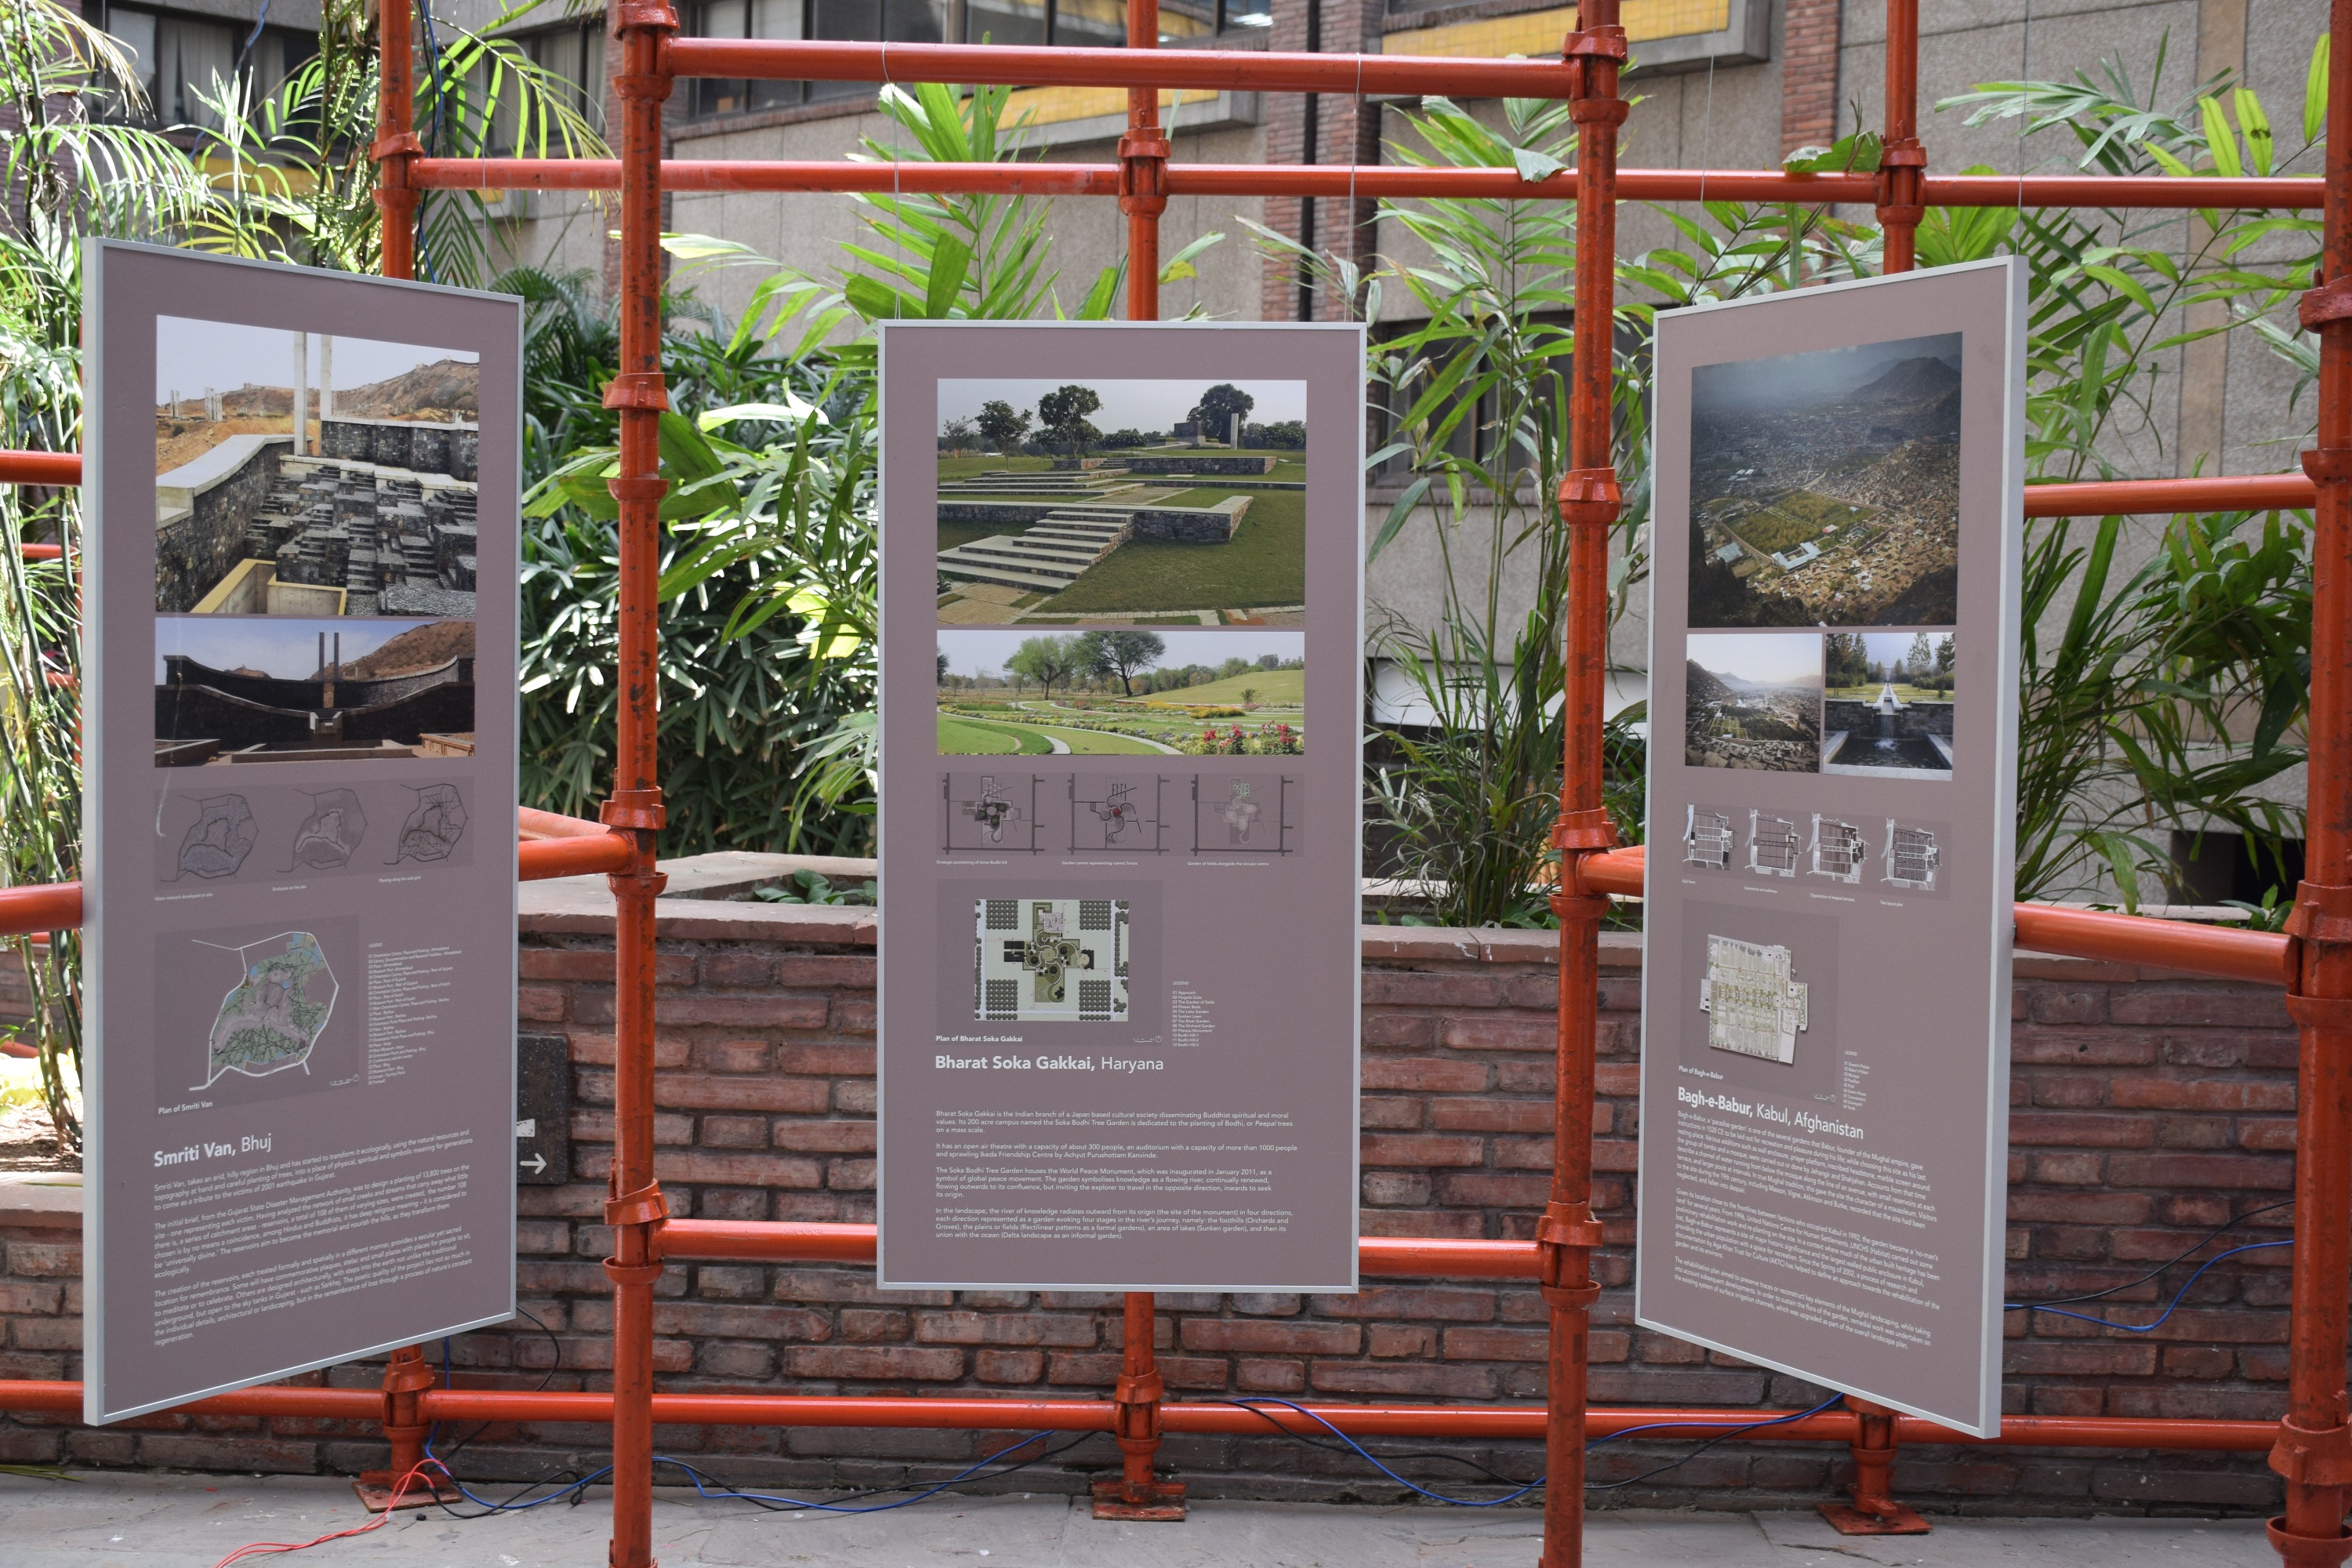 Exhibition on Indian Landscape Design